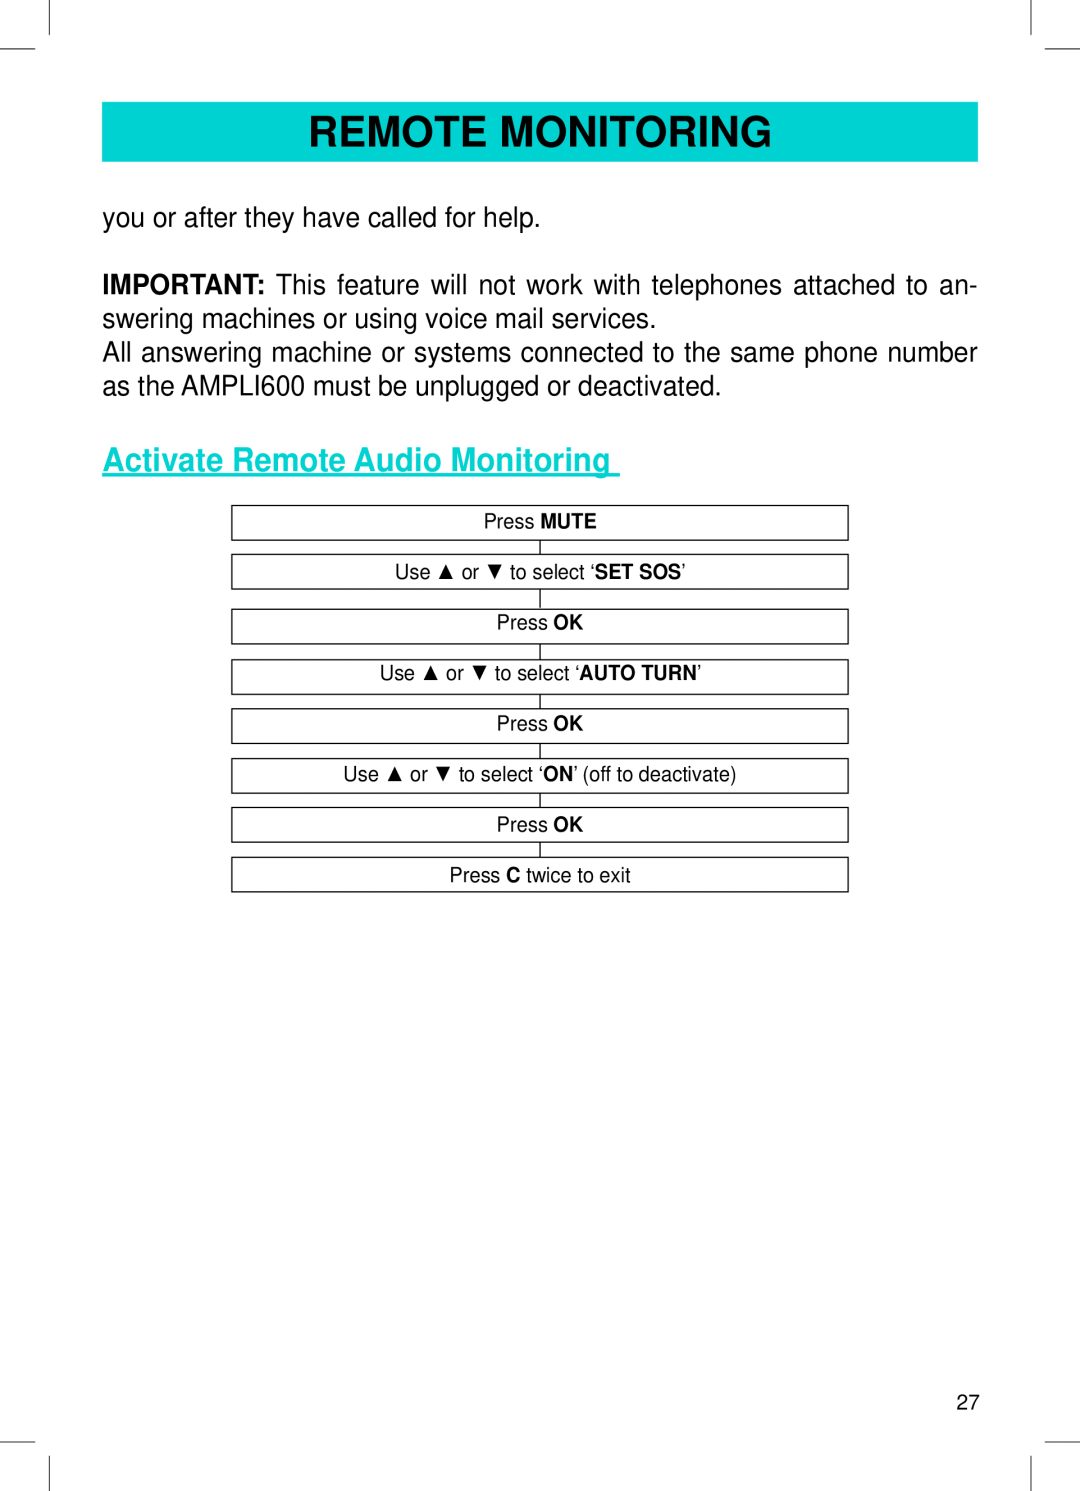 Geemarc AMPLI600 manual Remote Monitoring, Activate Remote Audio Monitoring 